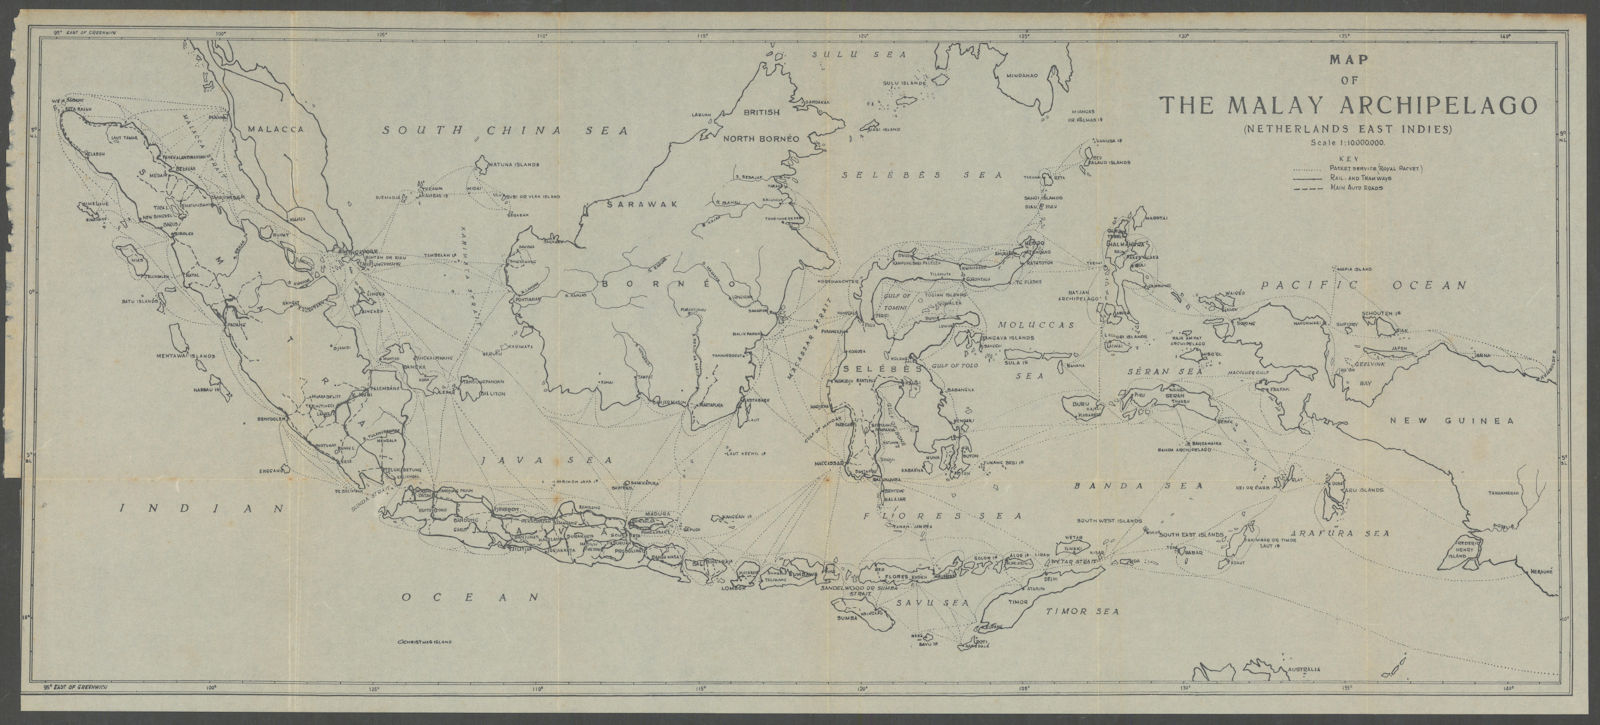 The Malay Archipelago (Netherlands East Indies), Indonesia. VAN STOCKUM 1930 map